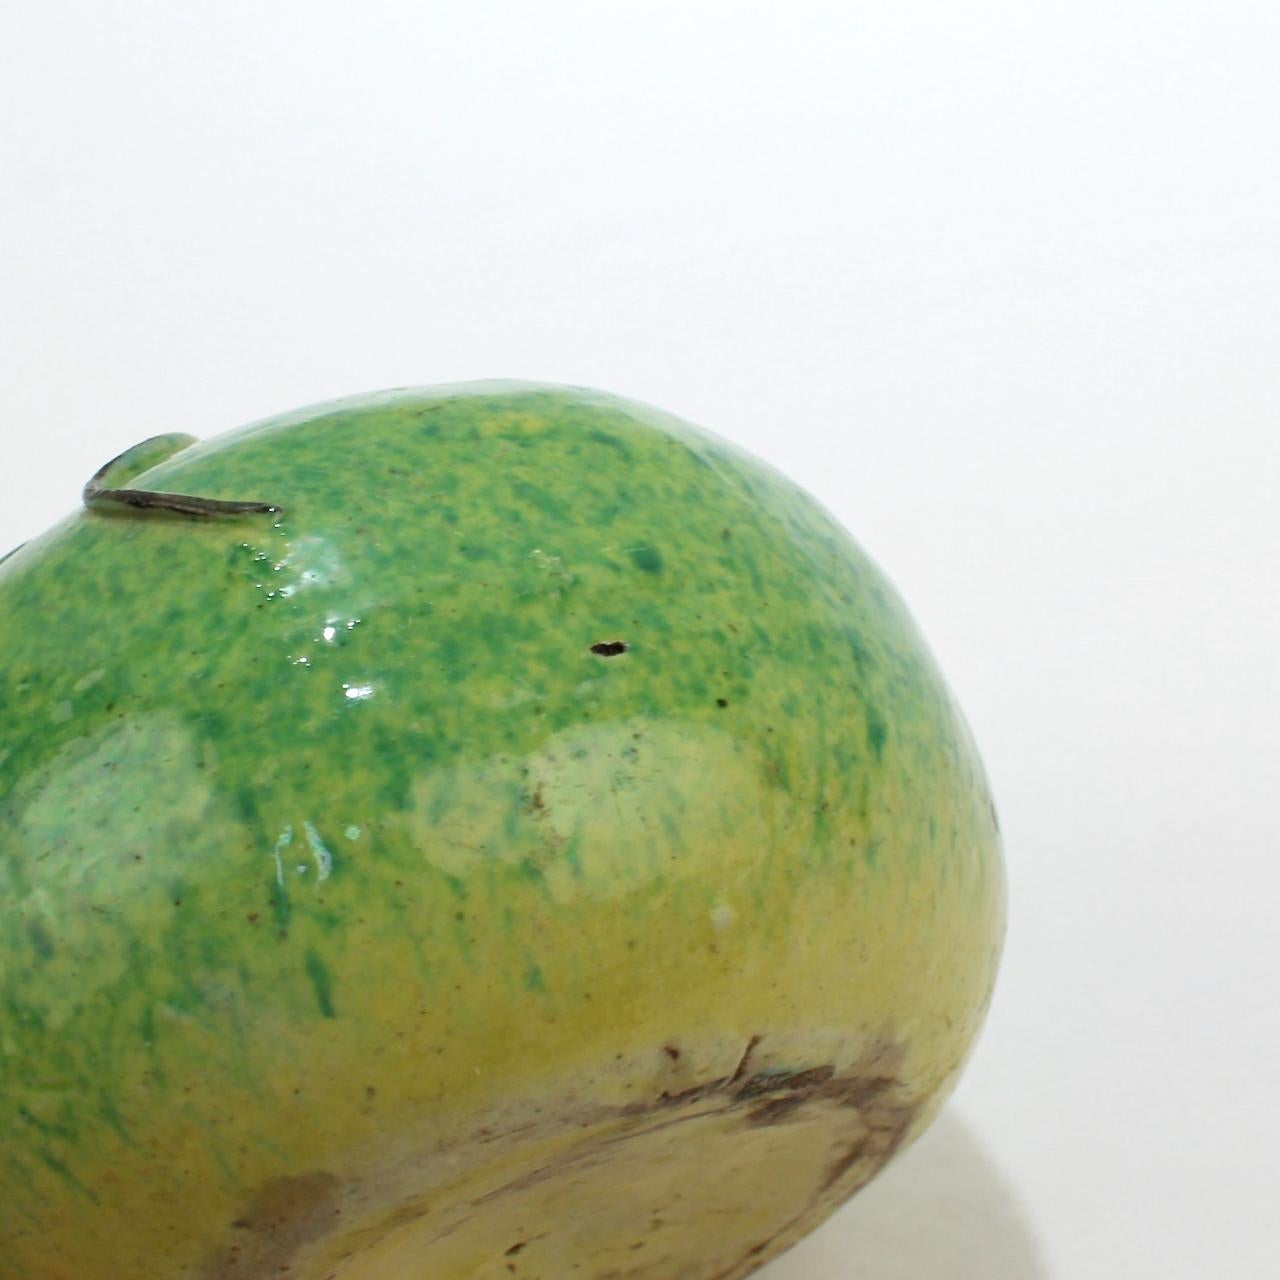 Antique Chinese Export Porcelain Green Apple Altar Fruit Ex-Gutfreund Collection 4